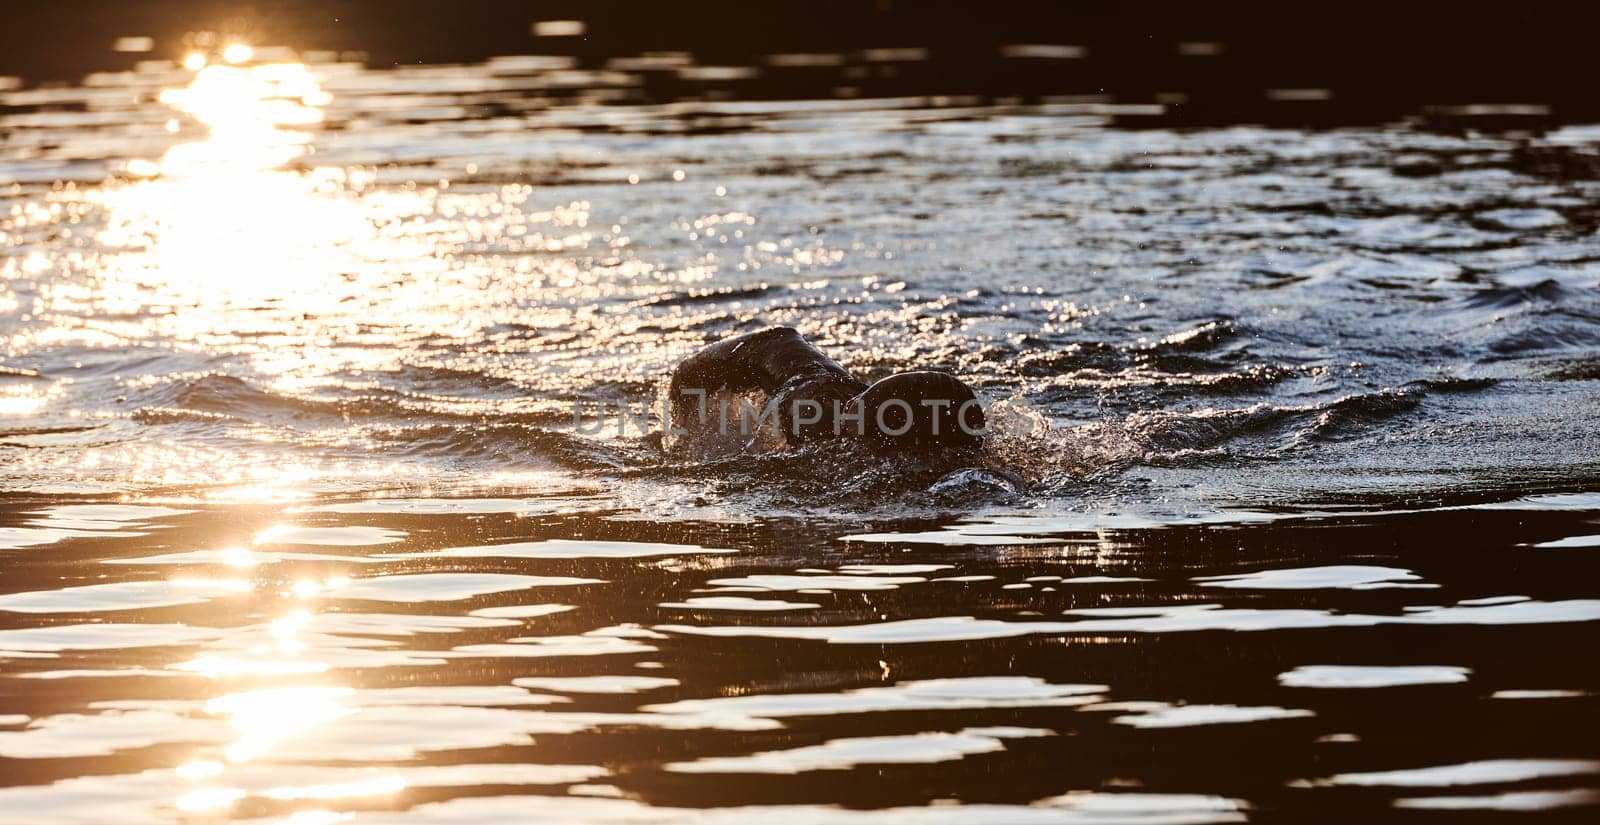 Triathlon athlete swimming on lake in sunrise wearing wetsuit by dotshock